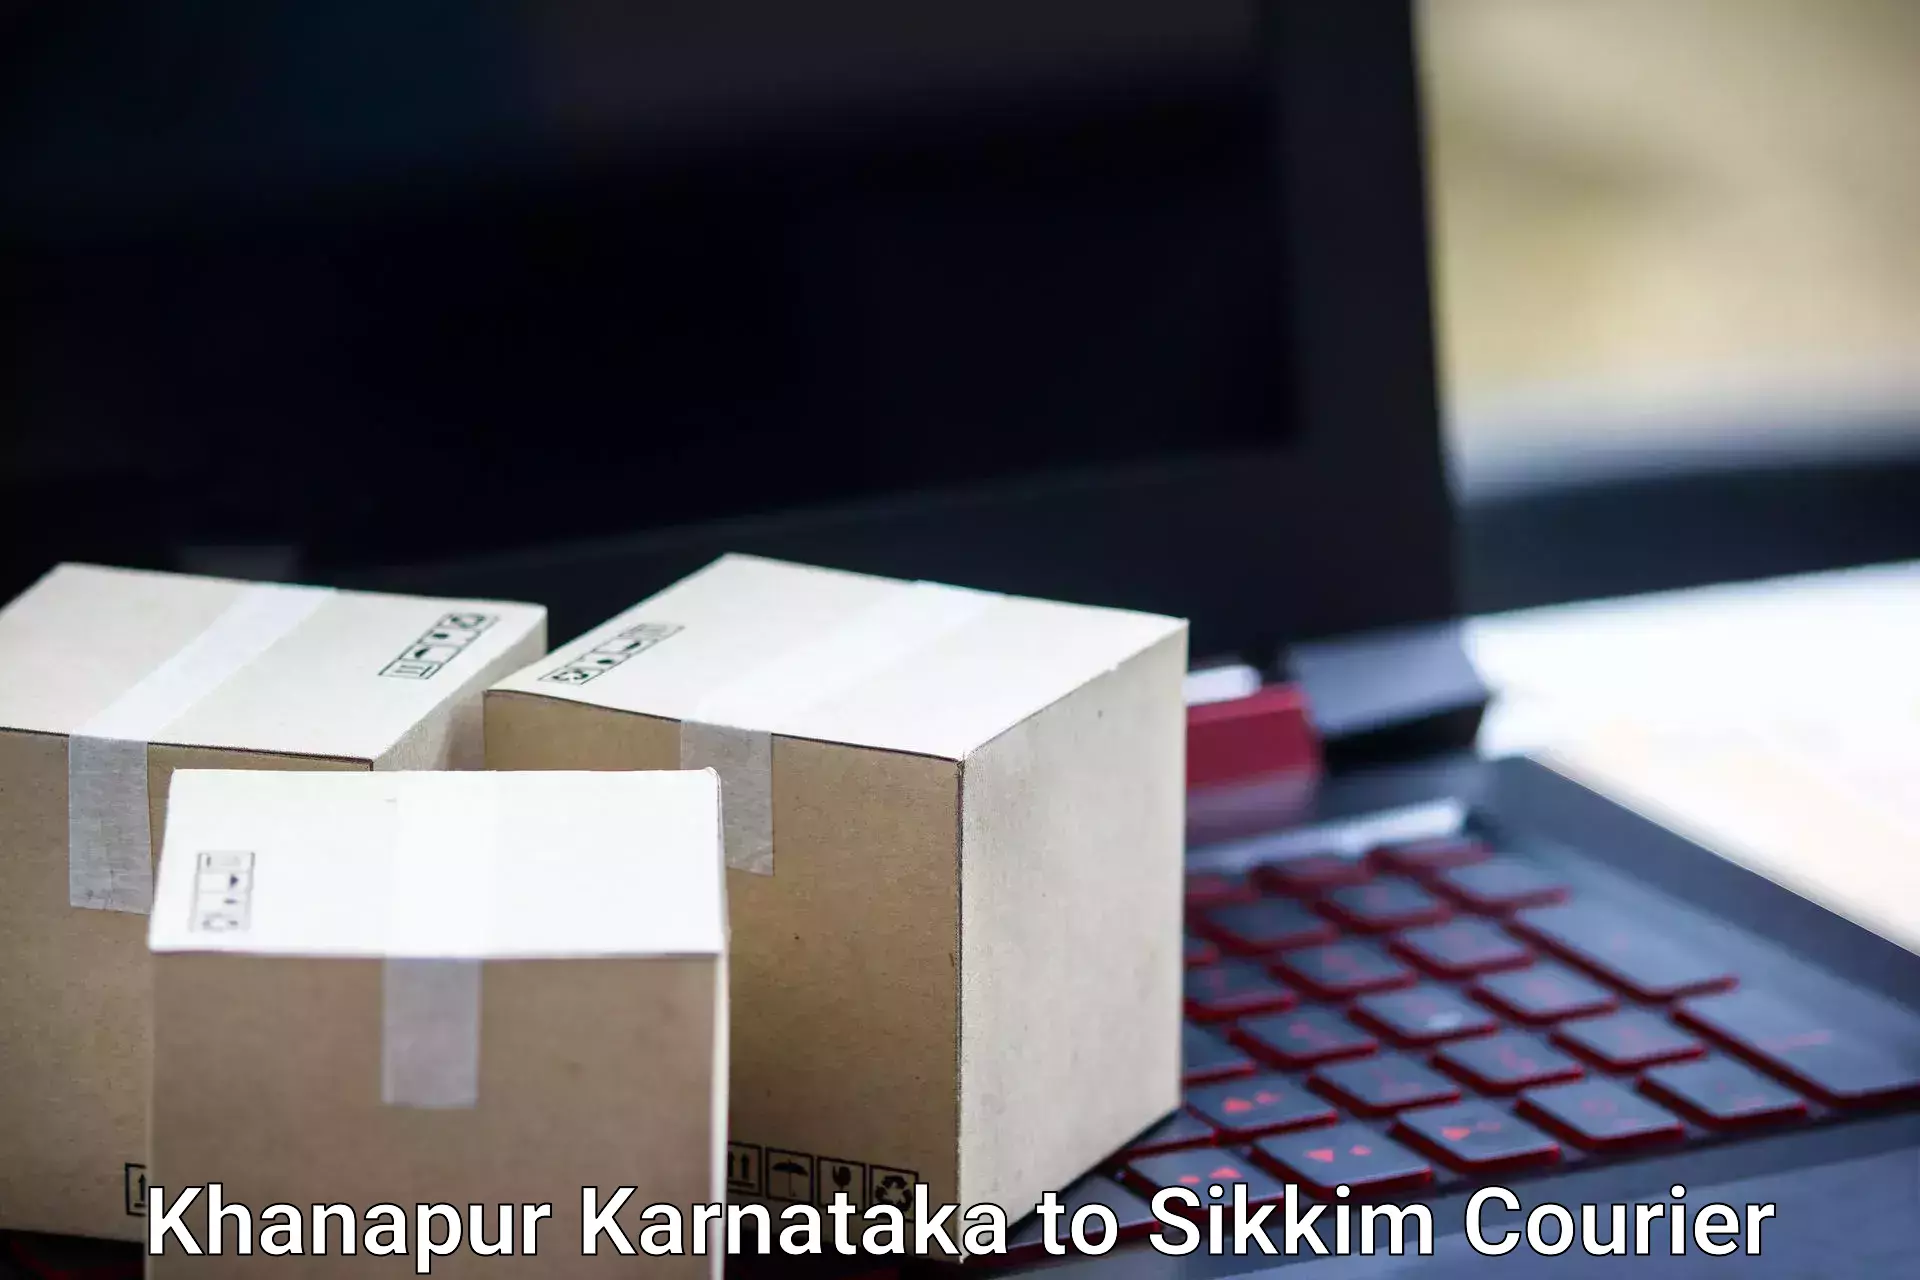 Baggage shipping service Khanapur Karnataka to Pelling